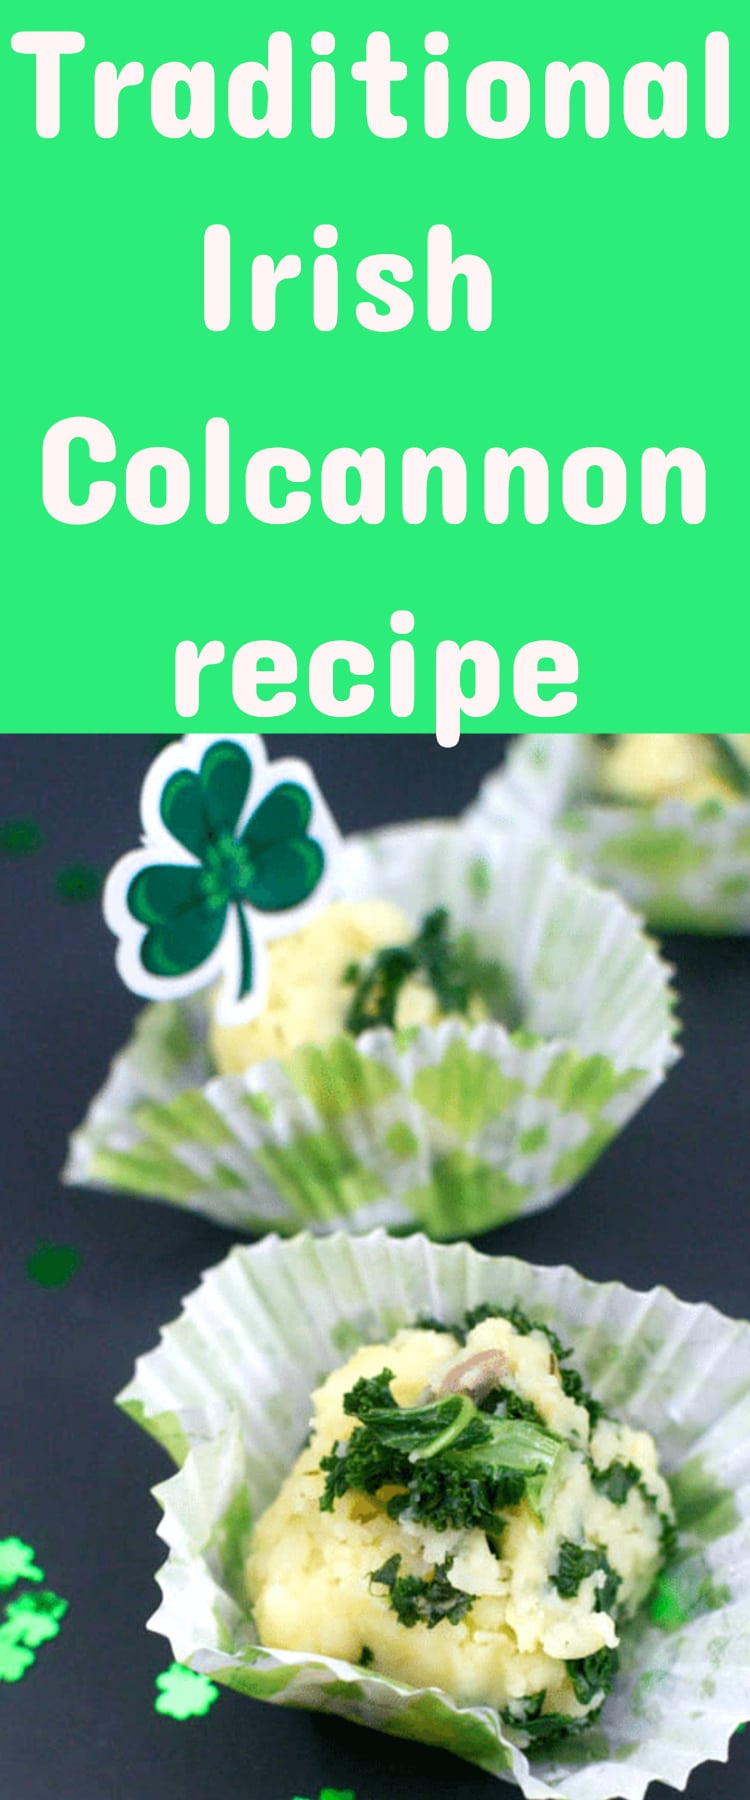 Irish recipes / recipes for st. patrick's day / colcannon / irish colcannon / potatoes / kale and potatoes #stpatricksday #irish